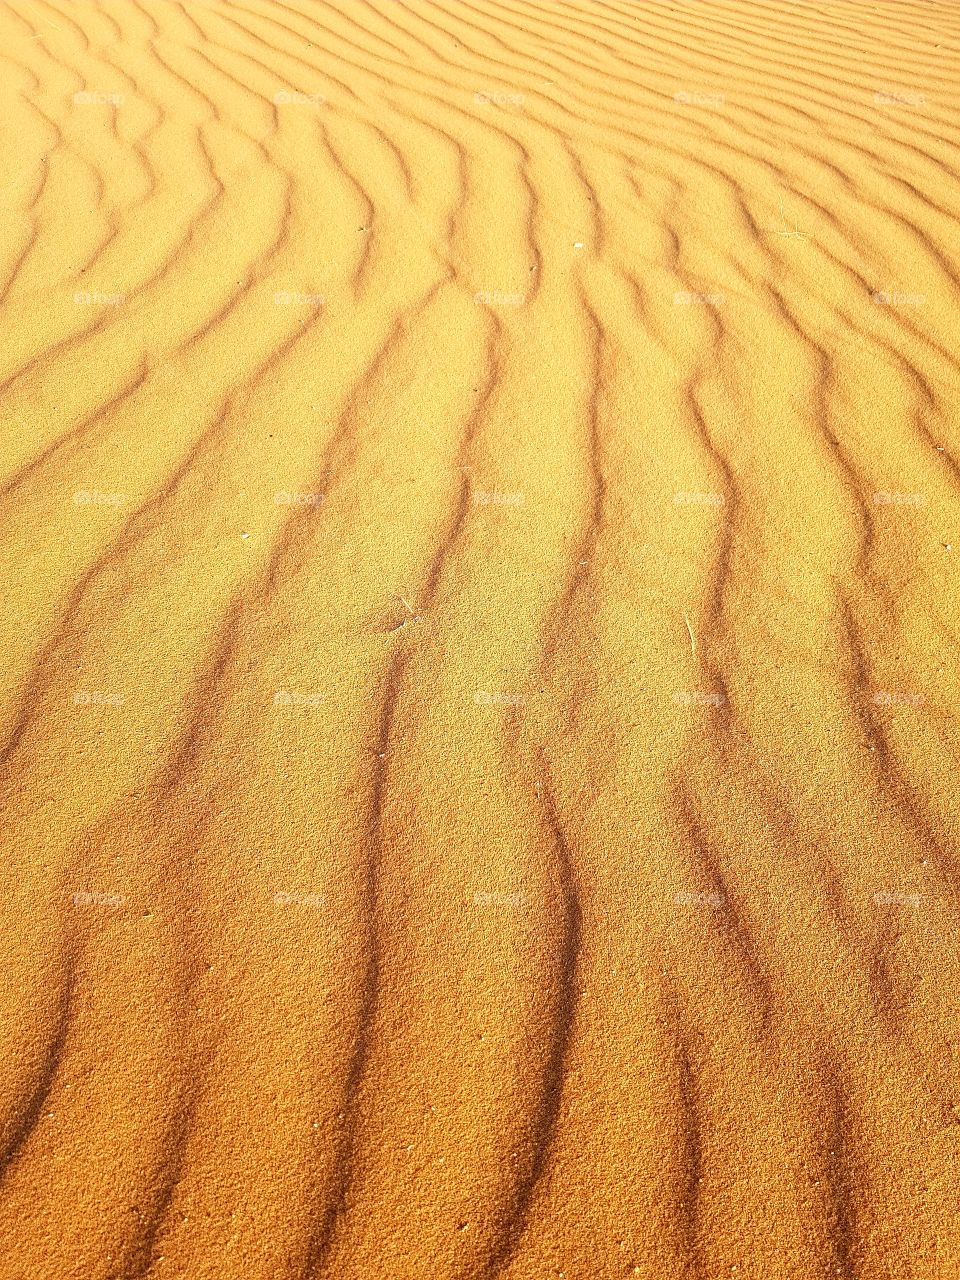 The golden sands of the Kingdom of Saudi Arabia